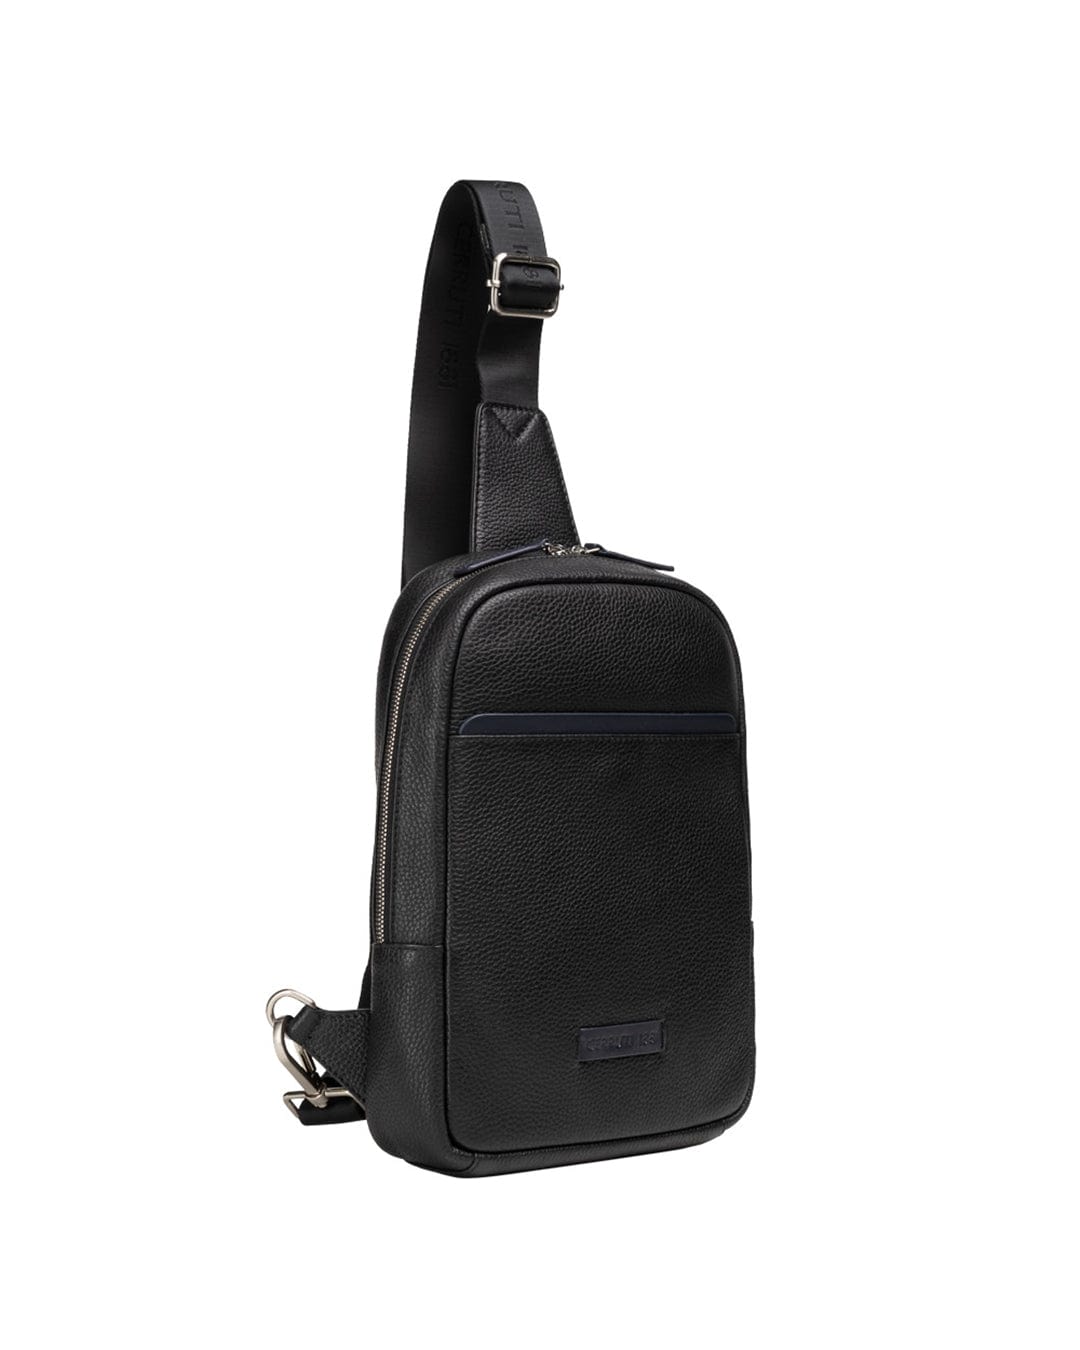 Cerruti Bags ONE SIZE Cerruti I88I Black Leather Strap Crossbody Bag